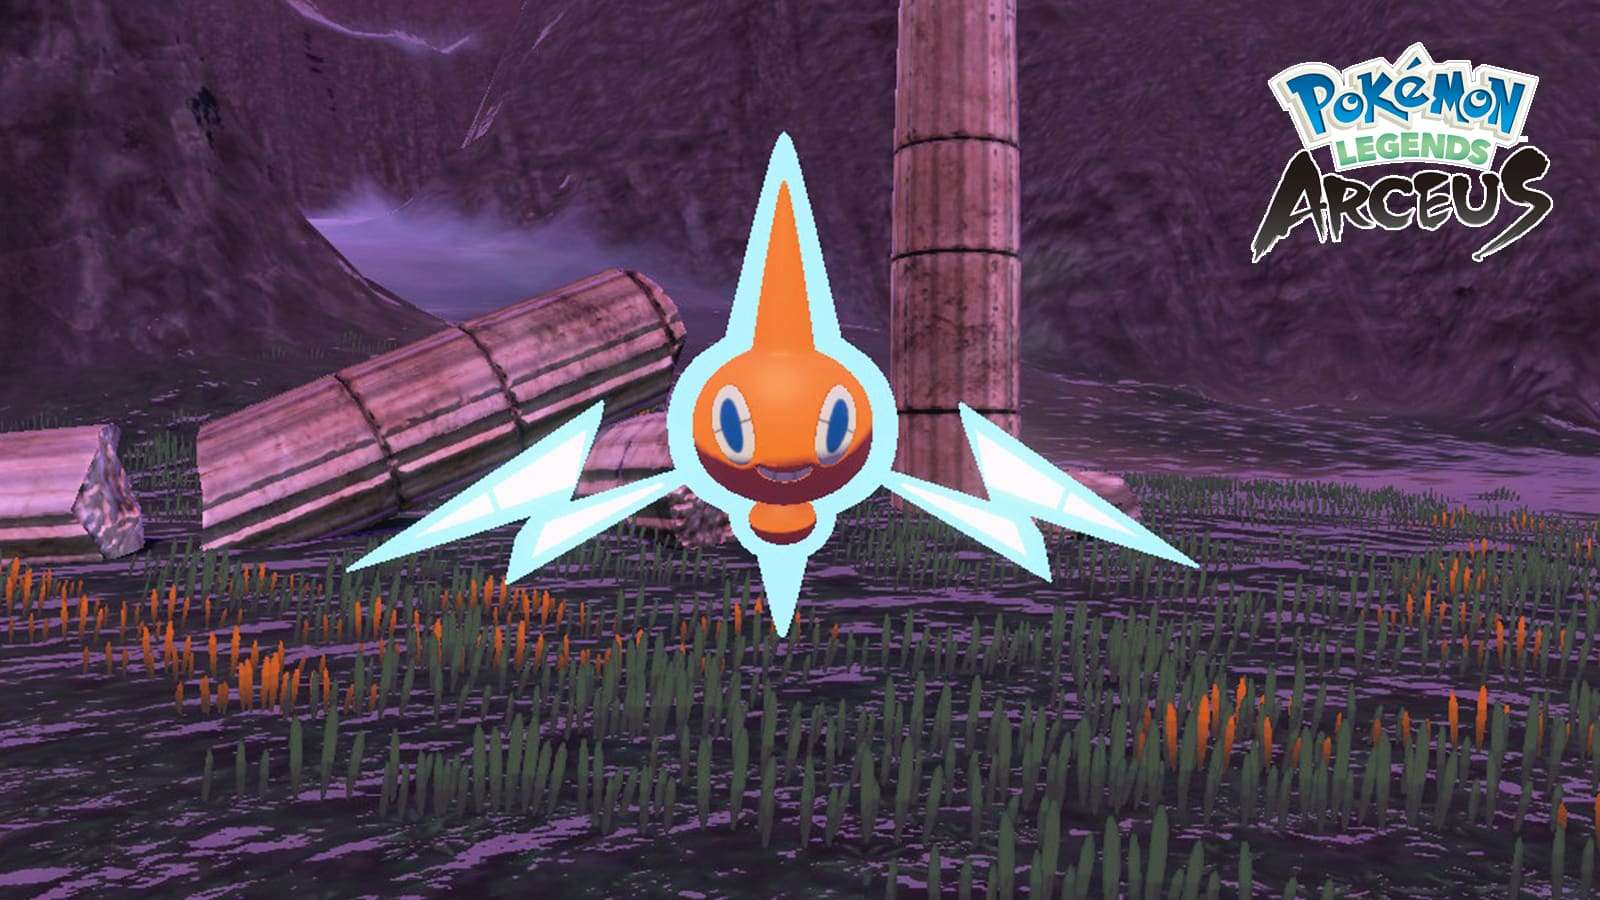 Rotom appearing in Pokemon Legends Arceus